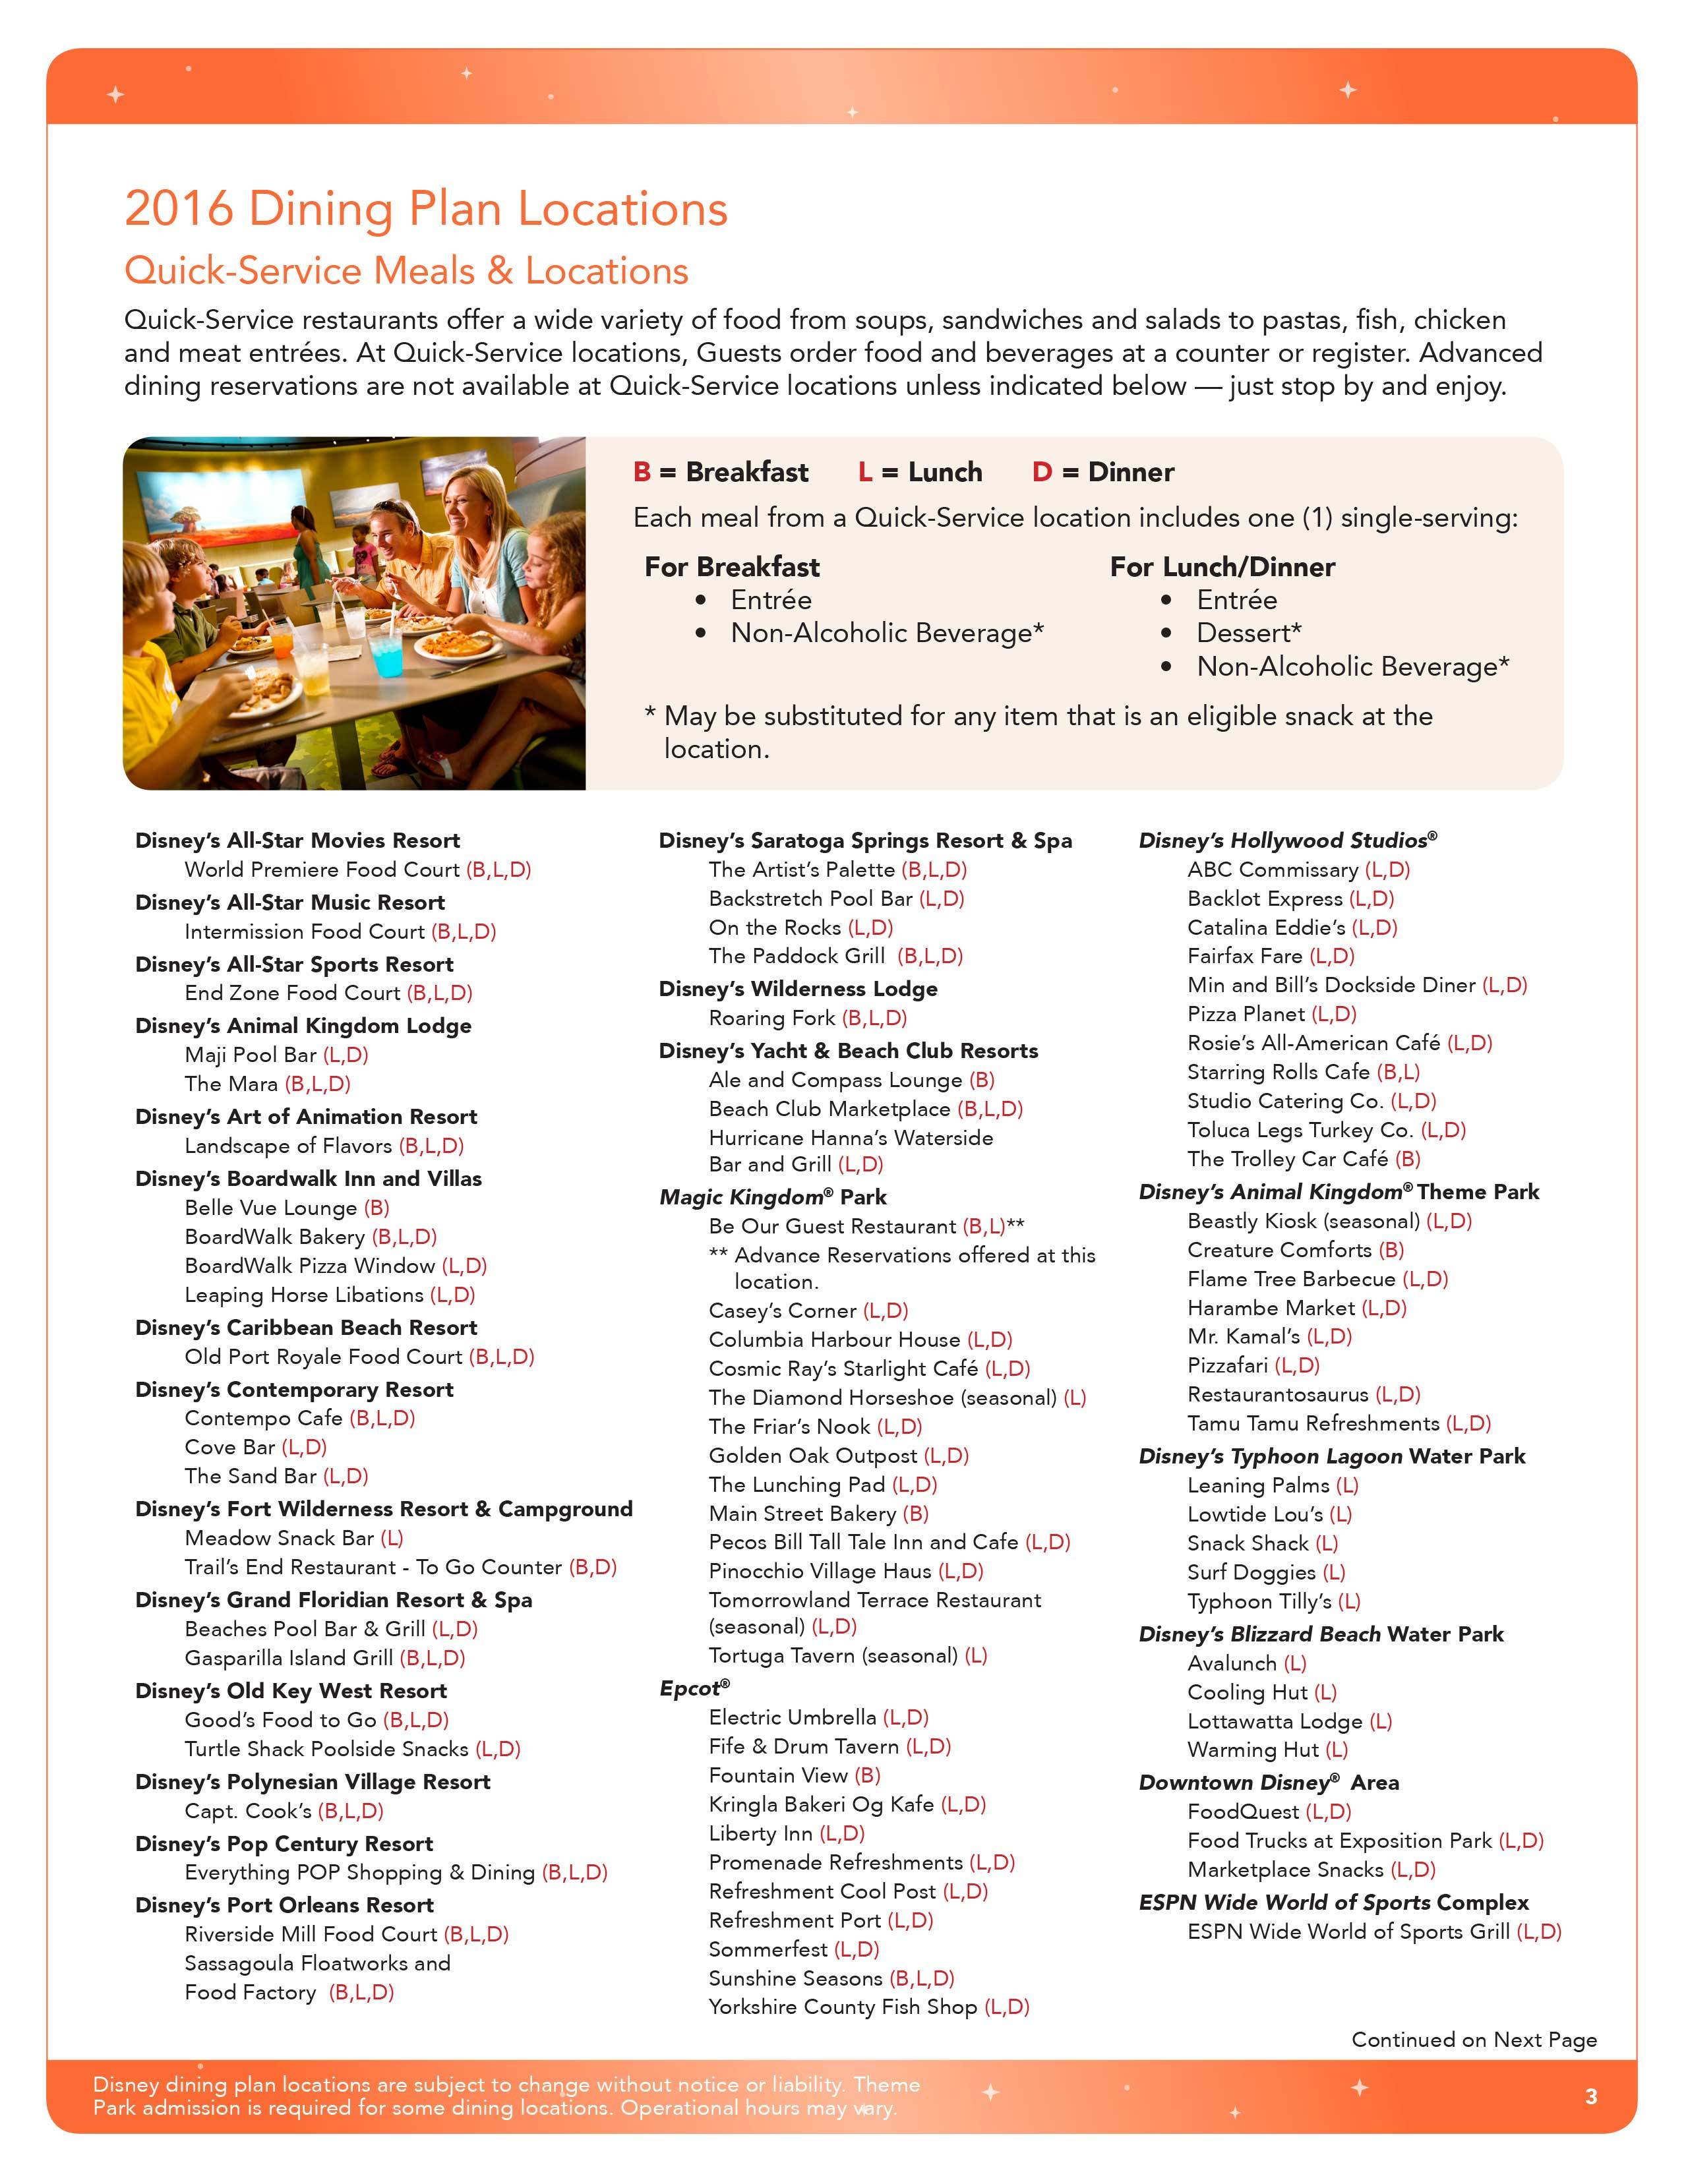 2016 Disney Premium Dining Plan brochure - Page 4